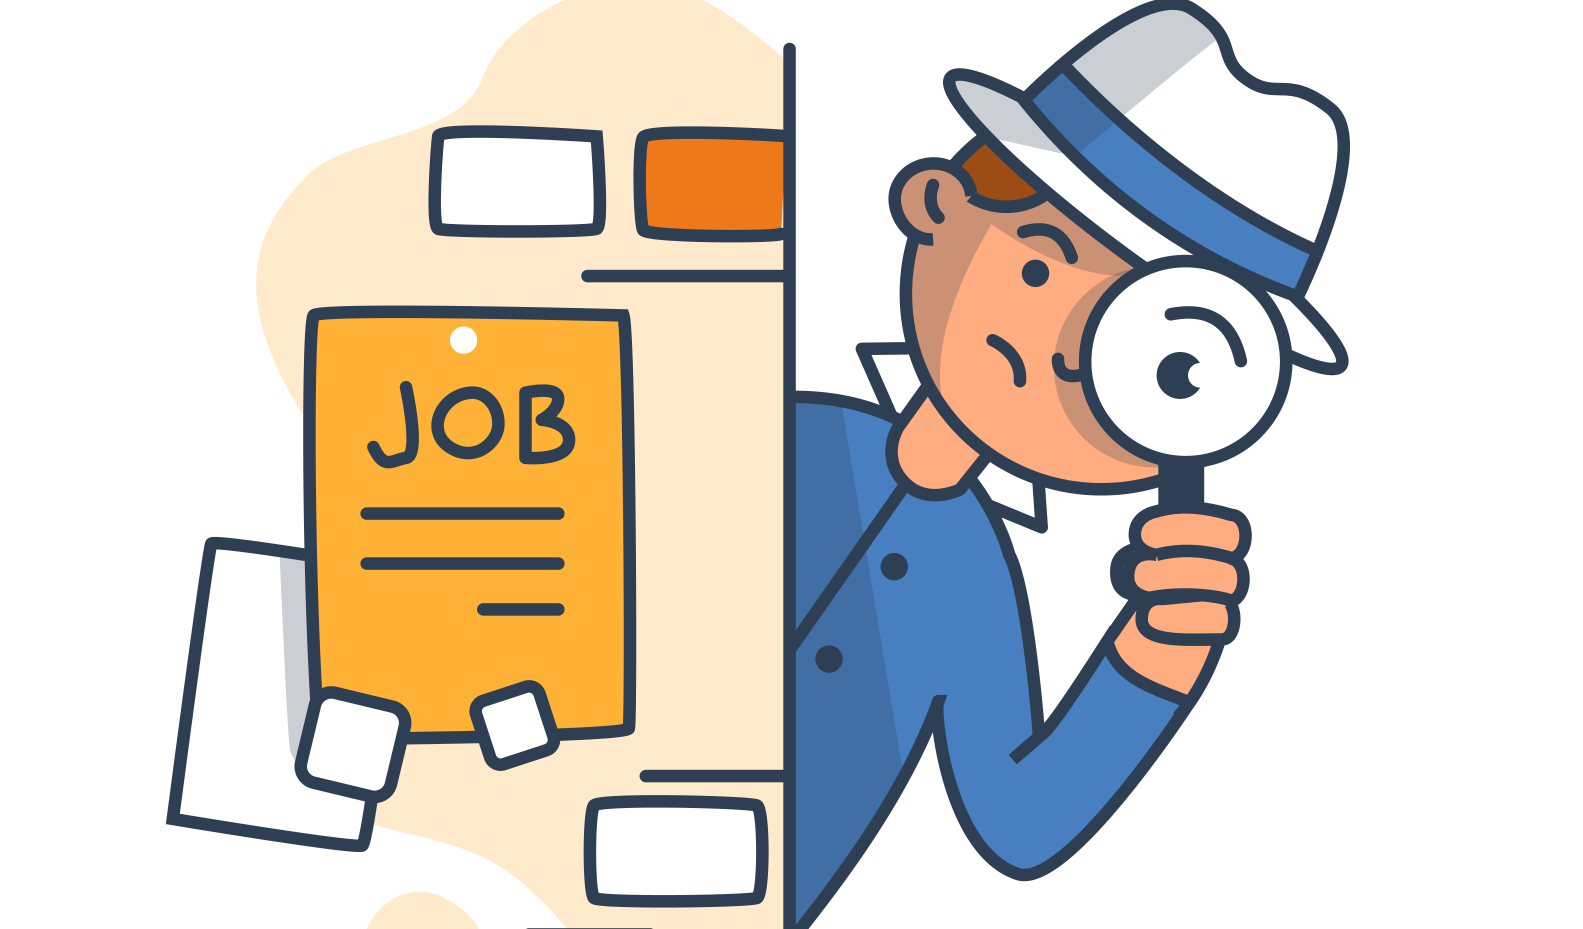 jobs clipart job search